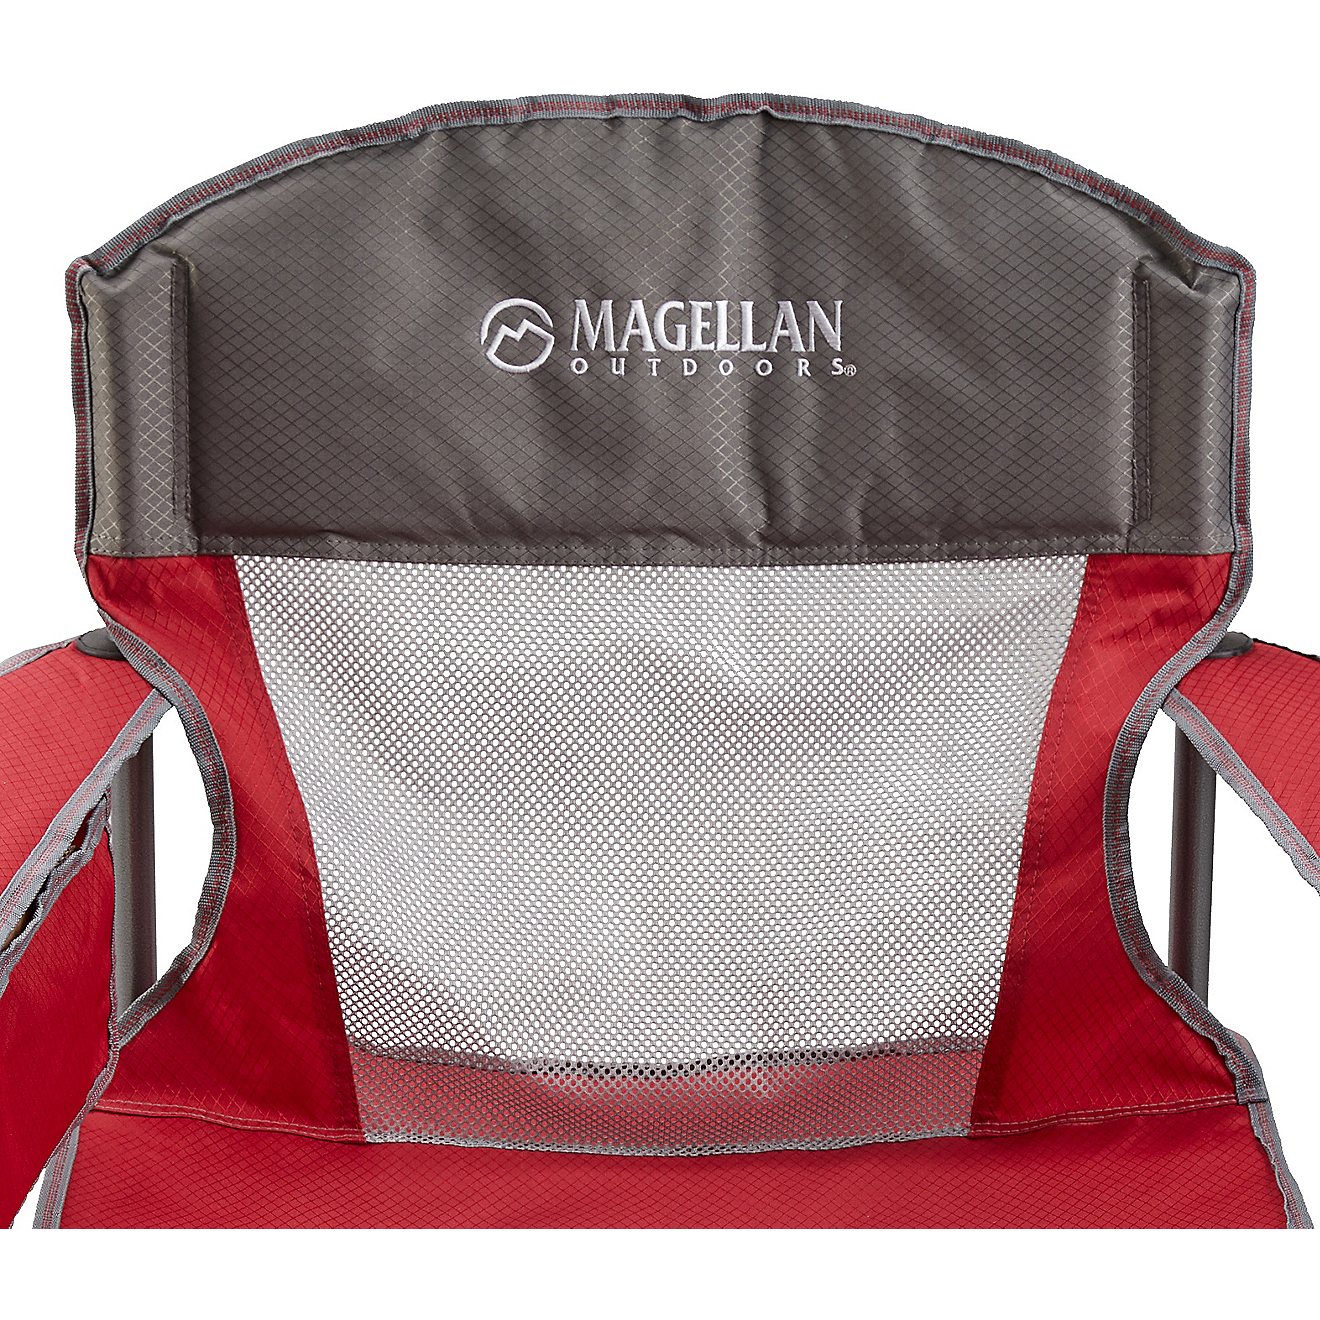 Magellan Outdoors Cool Comfort Mesh Chair                                                                                        - view number 5